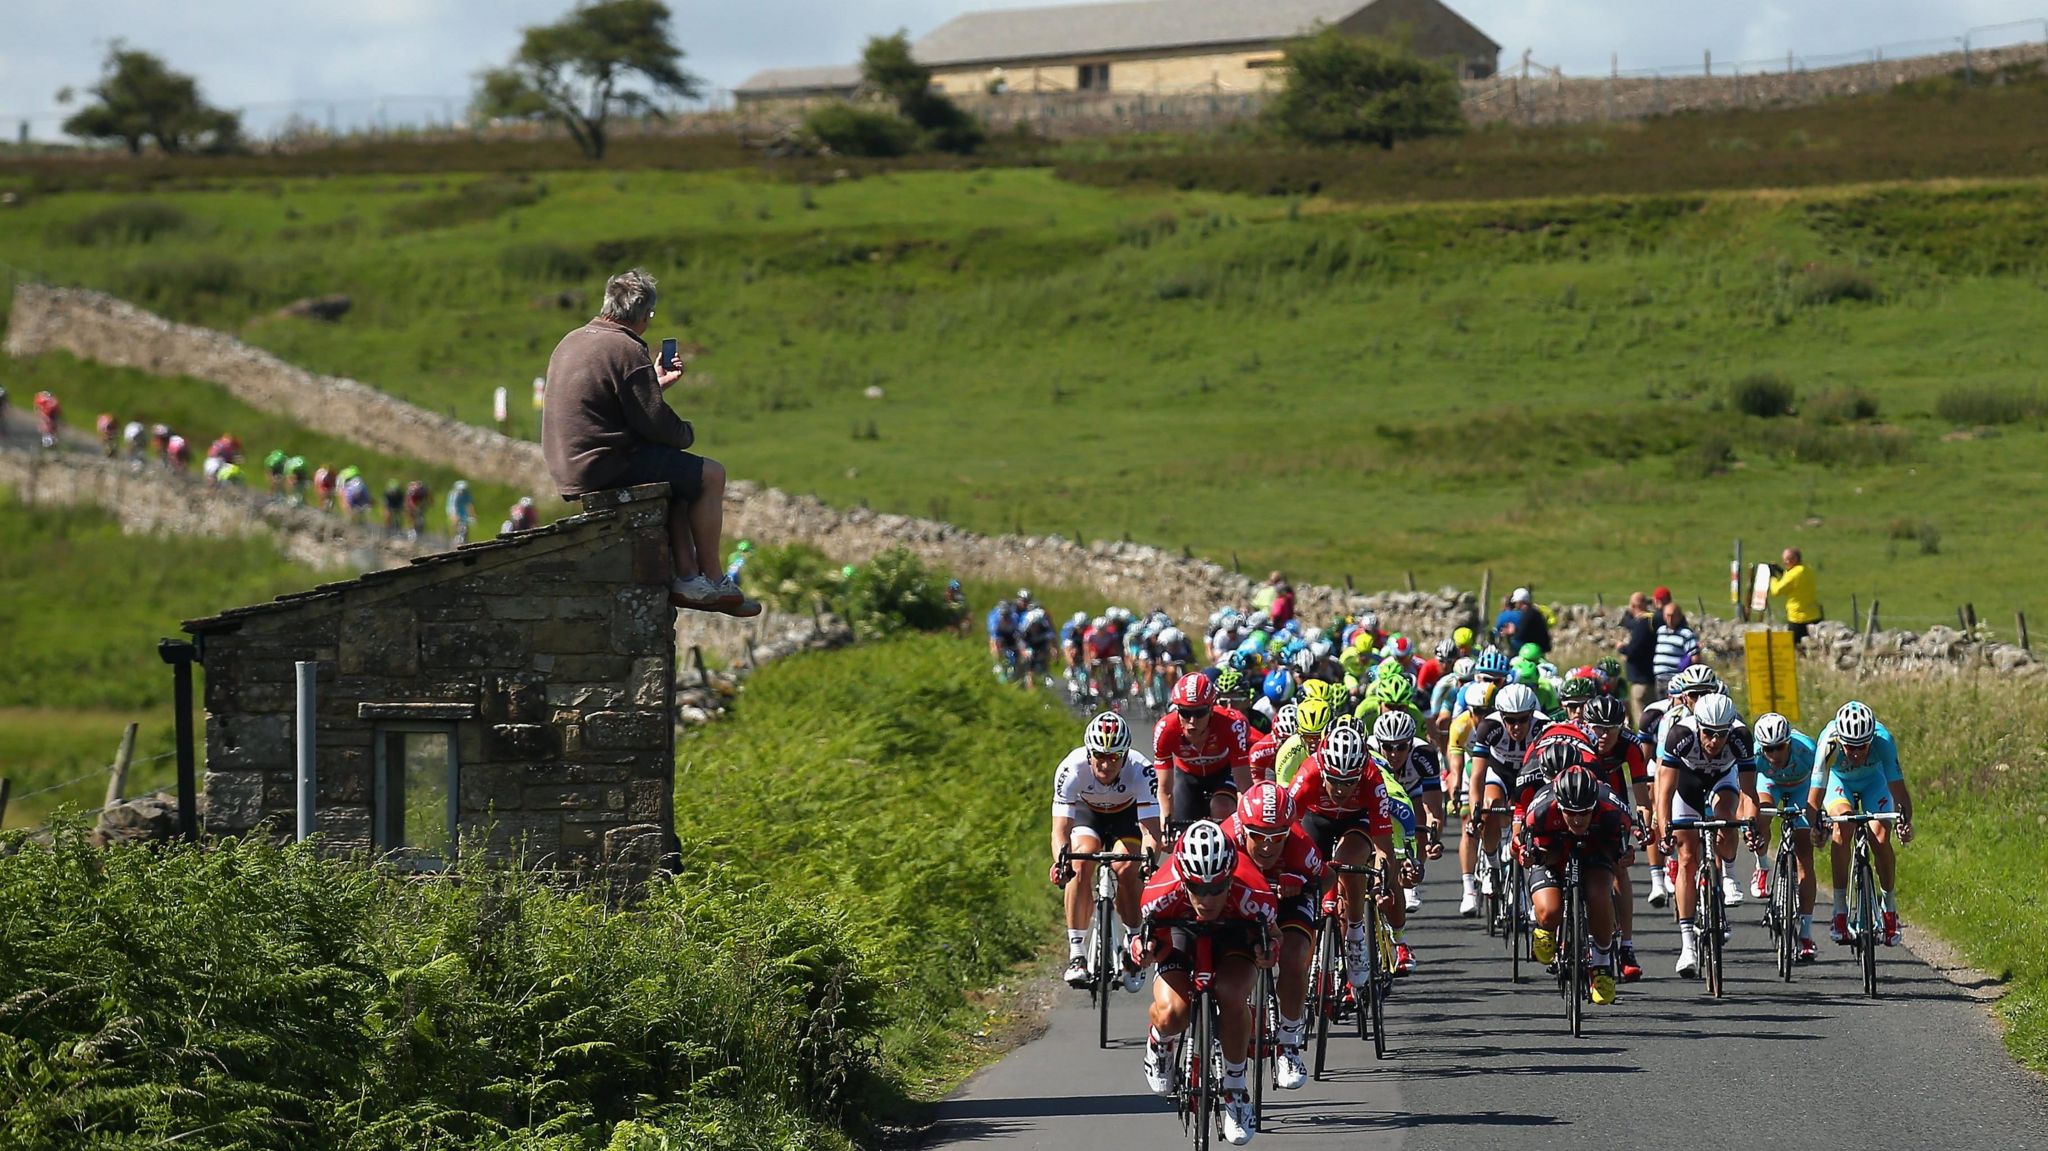 The 2014 Tour de France moves through North Yorkshire 